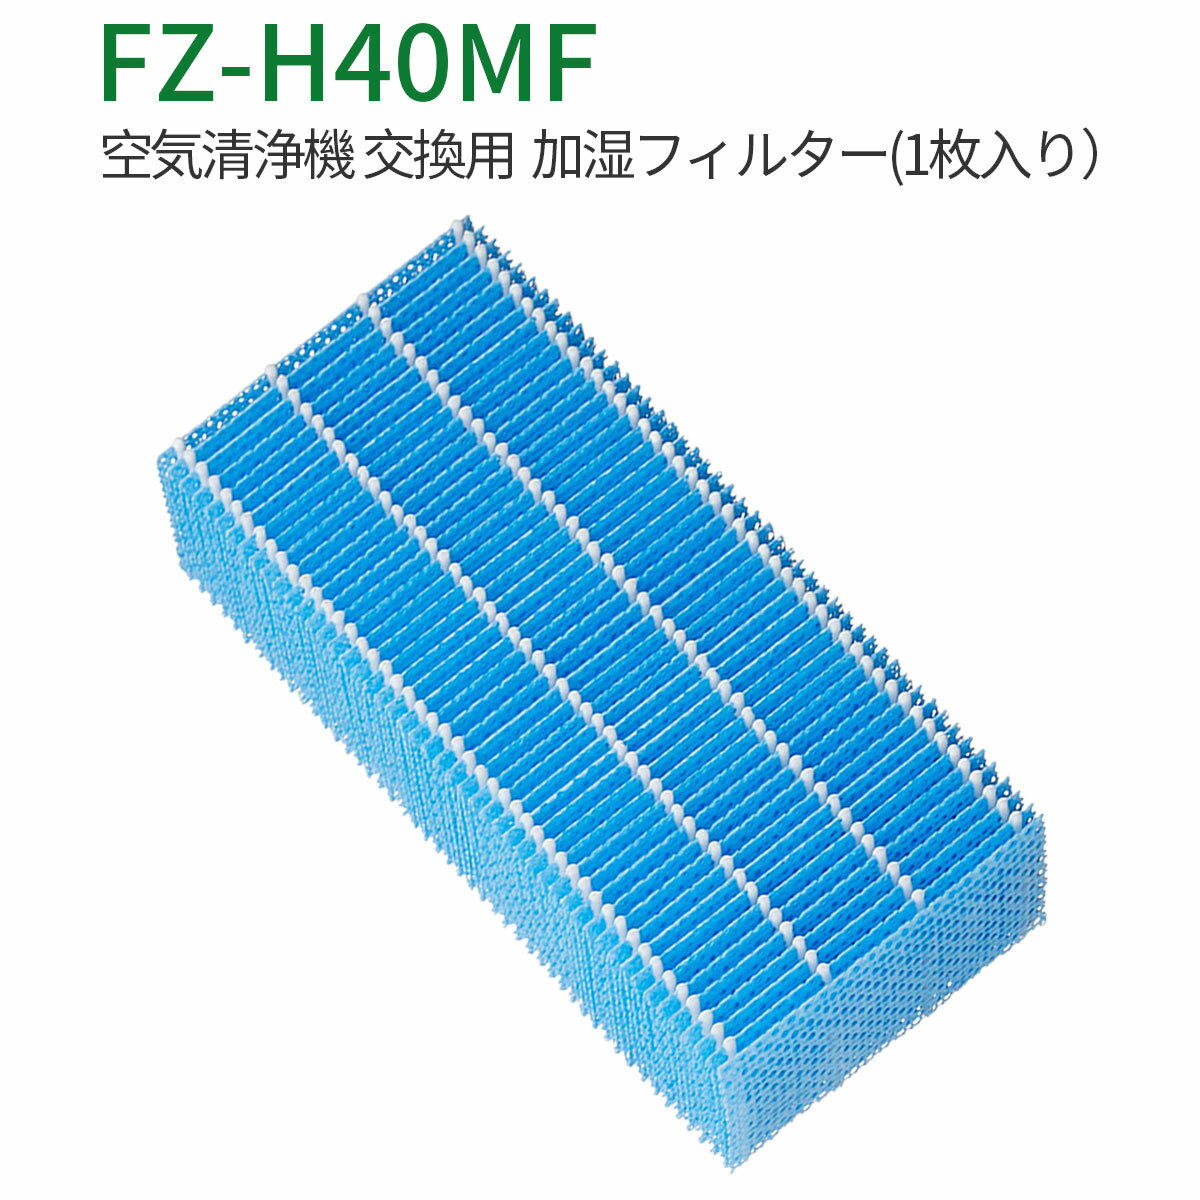 加湿フィルター FZ-H40MF シャープ 加湿空気清浄機 fz-h40mf フィルター KI-HS40 KI-JS40 KI-LD50 KI-LS40 KI-ND50 KI-NS40交換用 (互換品/1個入り)